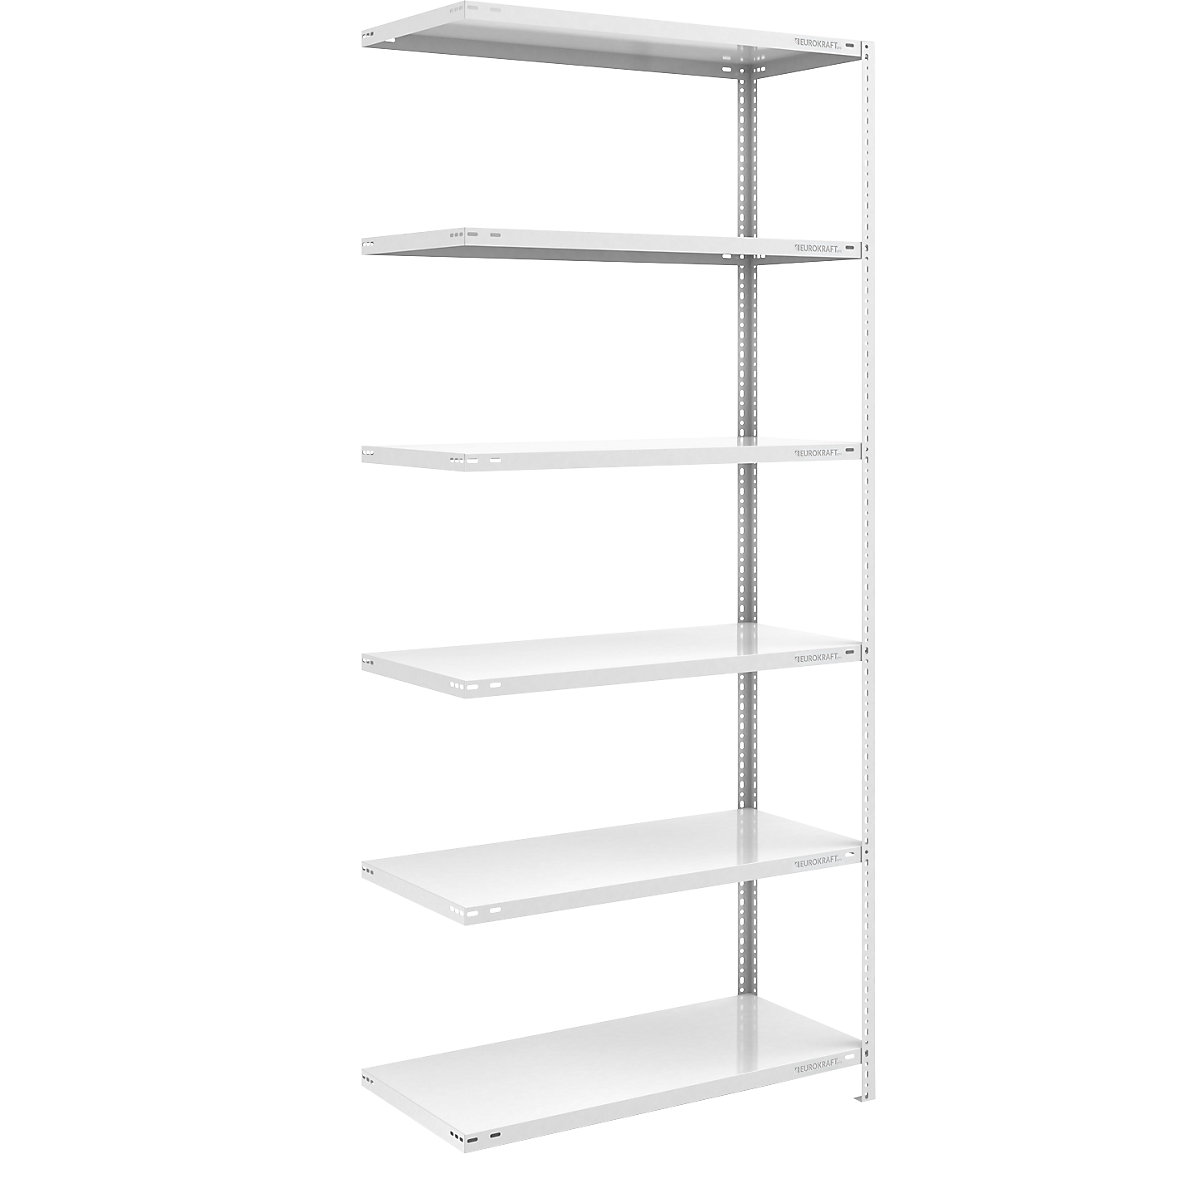 Bolt-together shelf unit, light duty, plastic coated – eurokraft pro, shelf unit height 2500 mm, shelf width 1000 mm, depth 600 mm, extension shelf unit-9